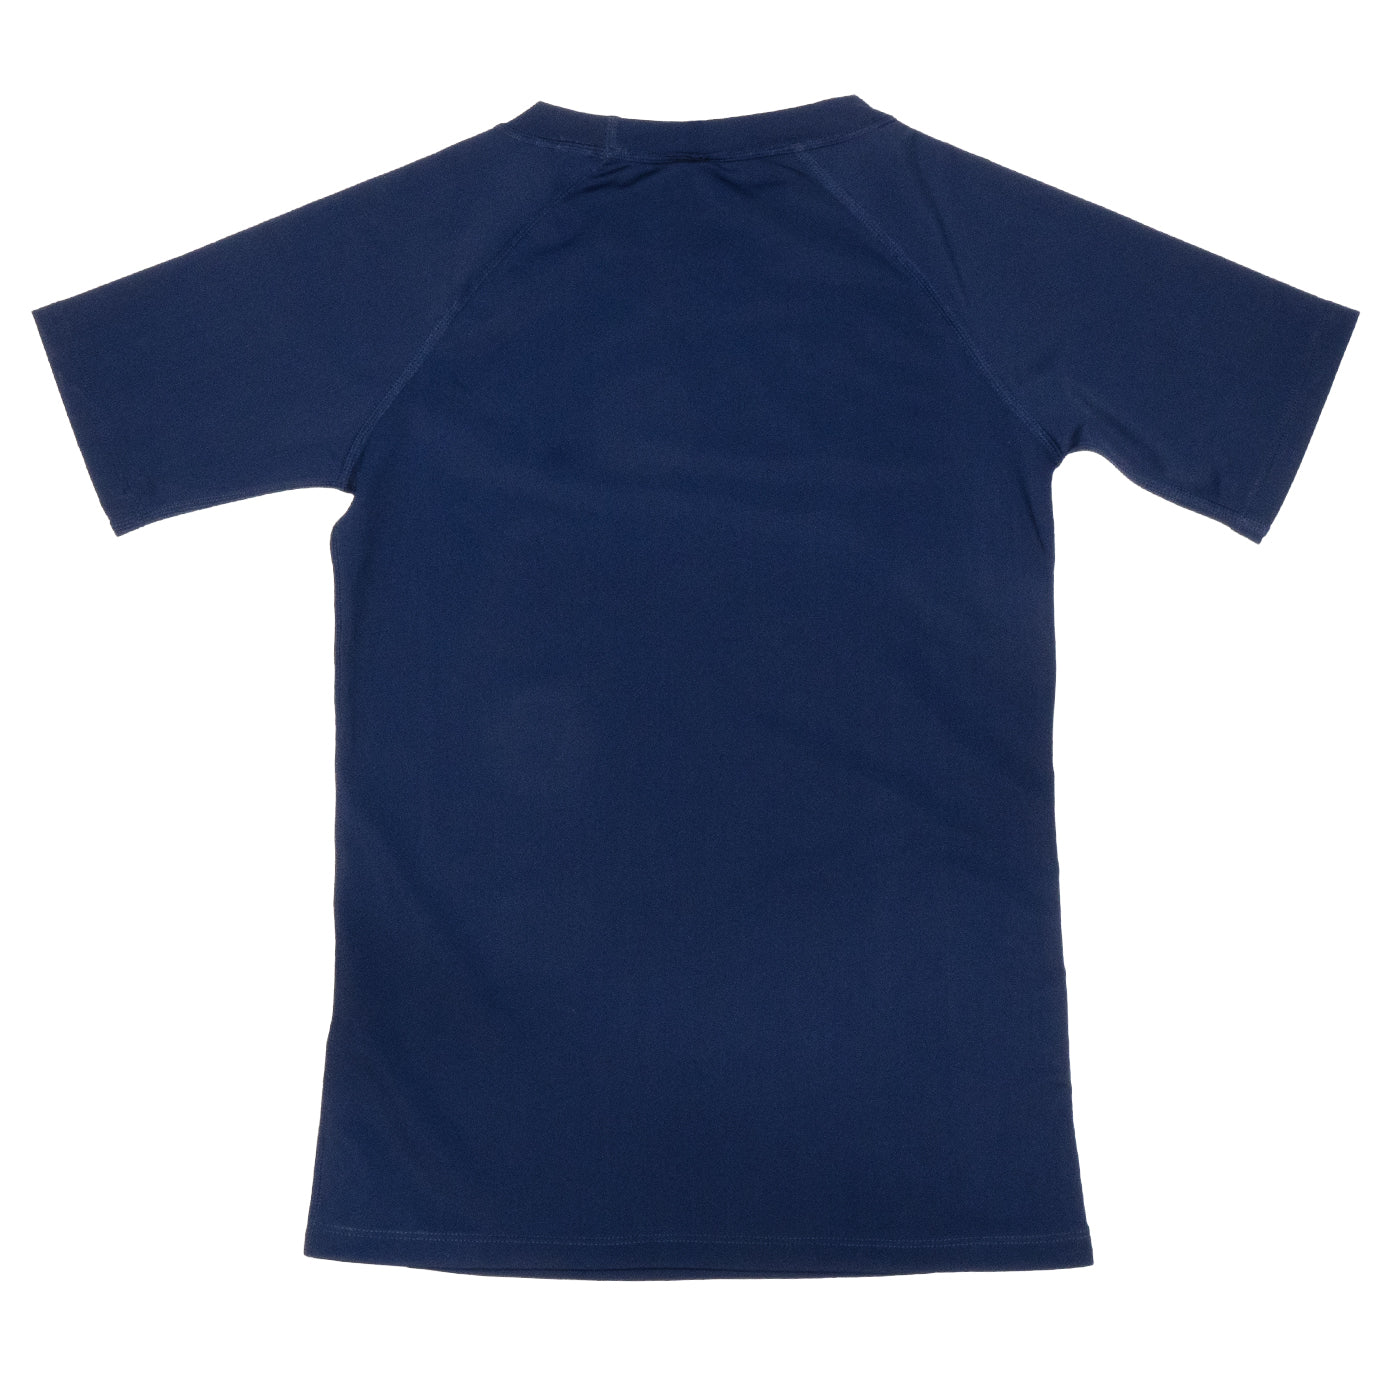 Kids Rashguard Sun Protectant T-Shirt - Navy/Orange